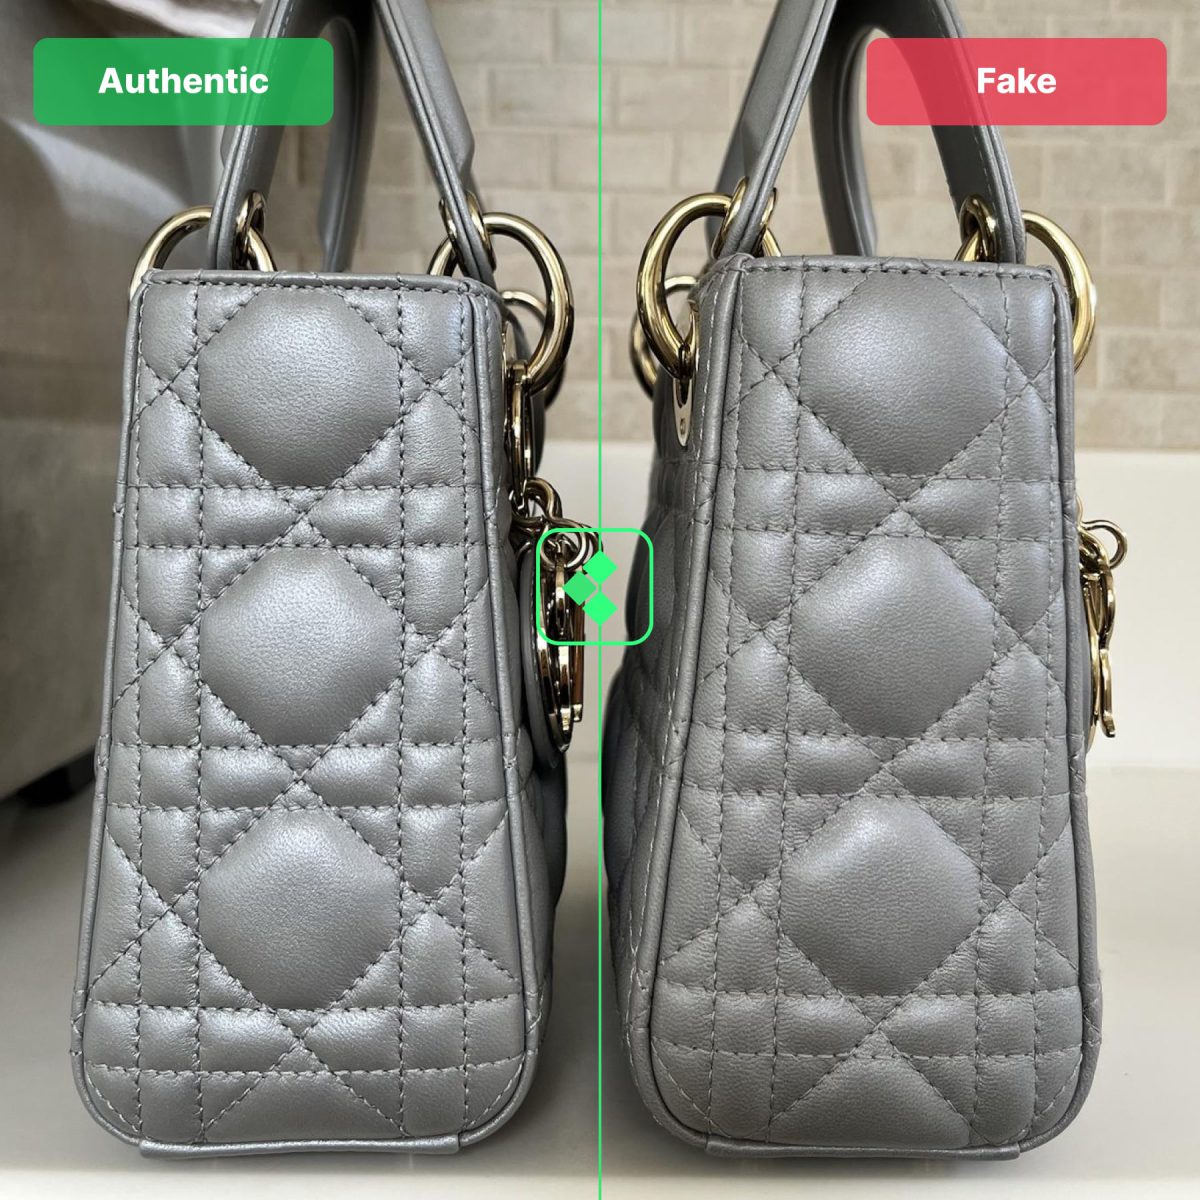 Dior bag - Real vs fake Shape